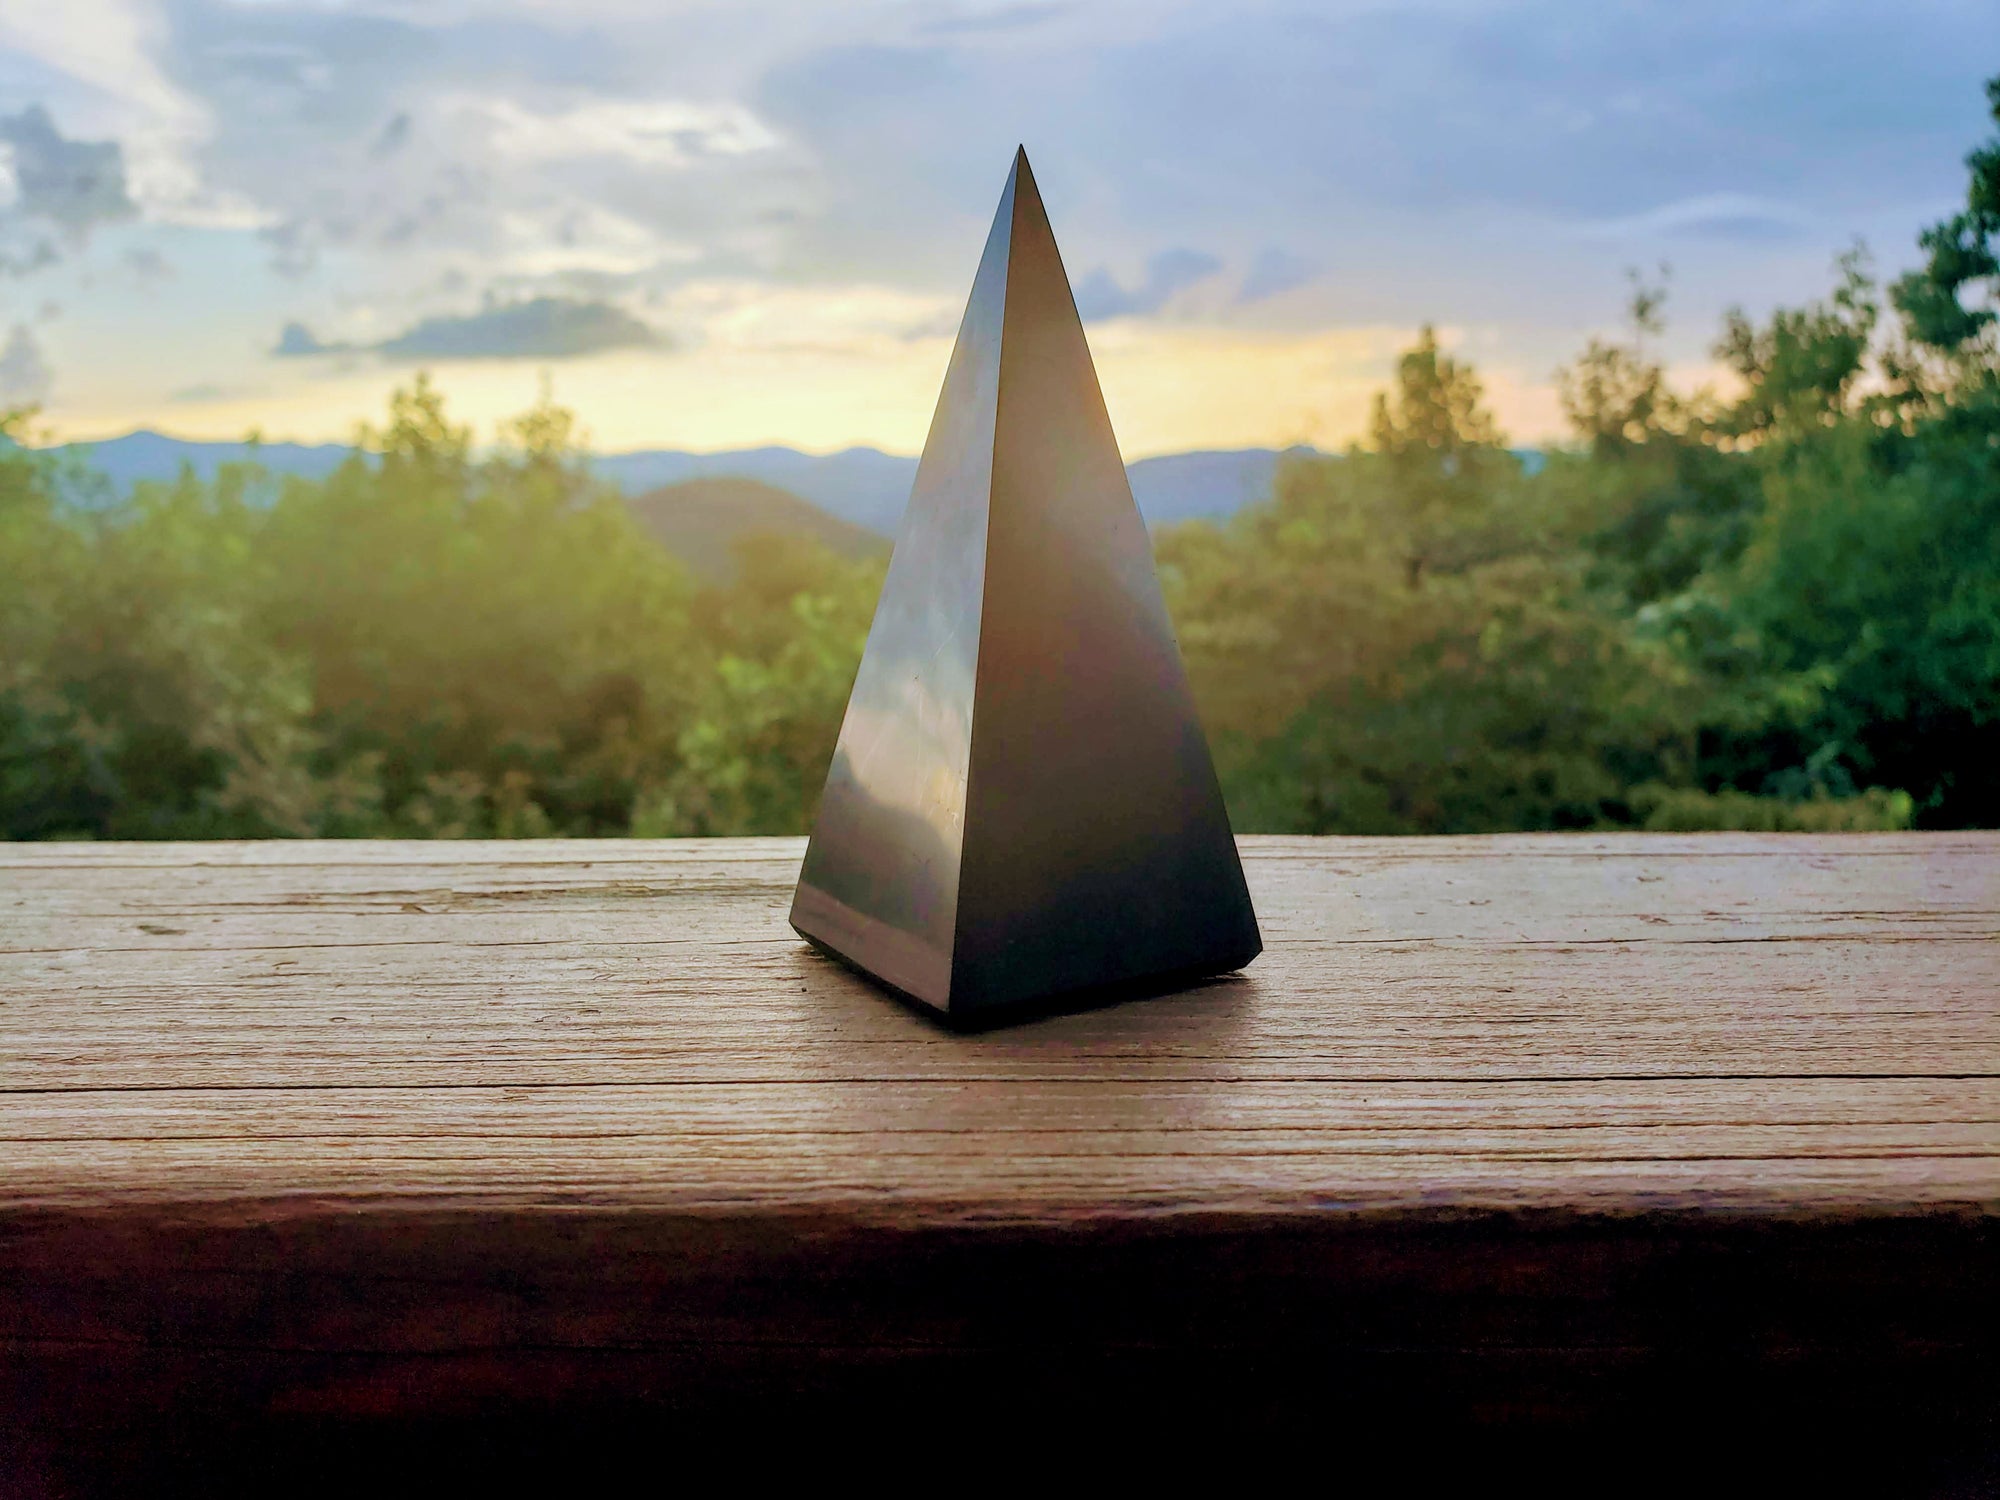 XL Polished Shungite Pyramid - 7.5 inch Reiki-Charged Power Pyramid